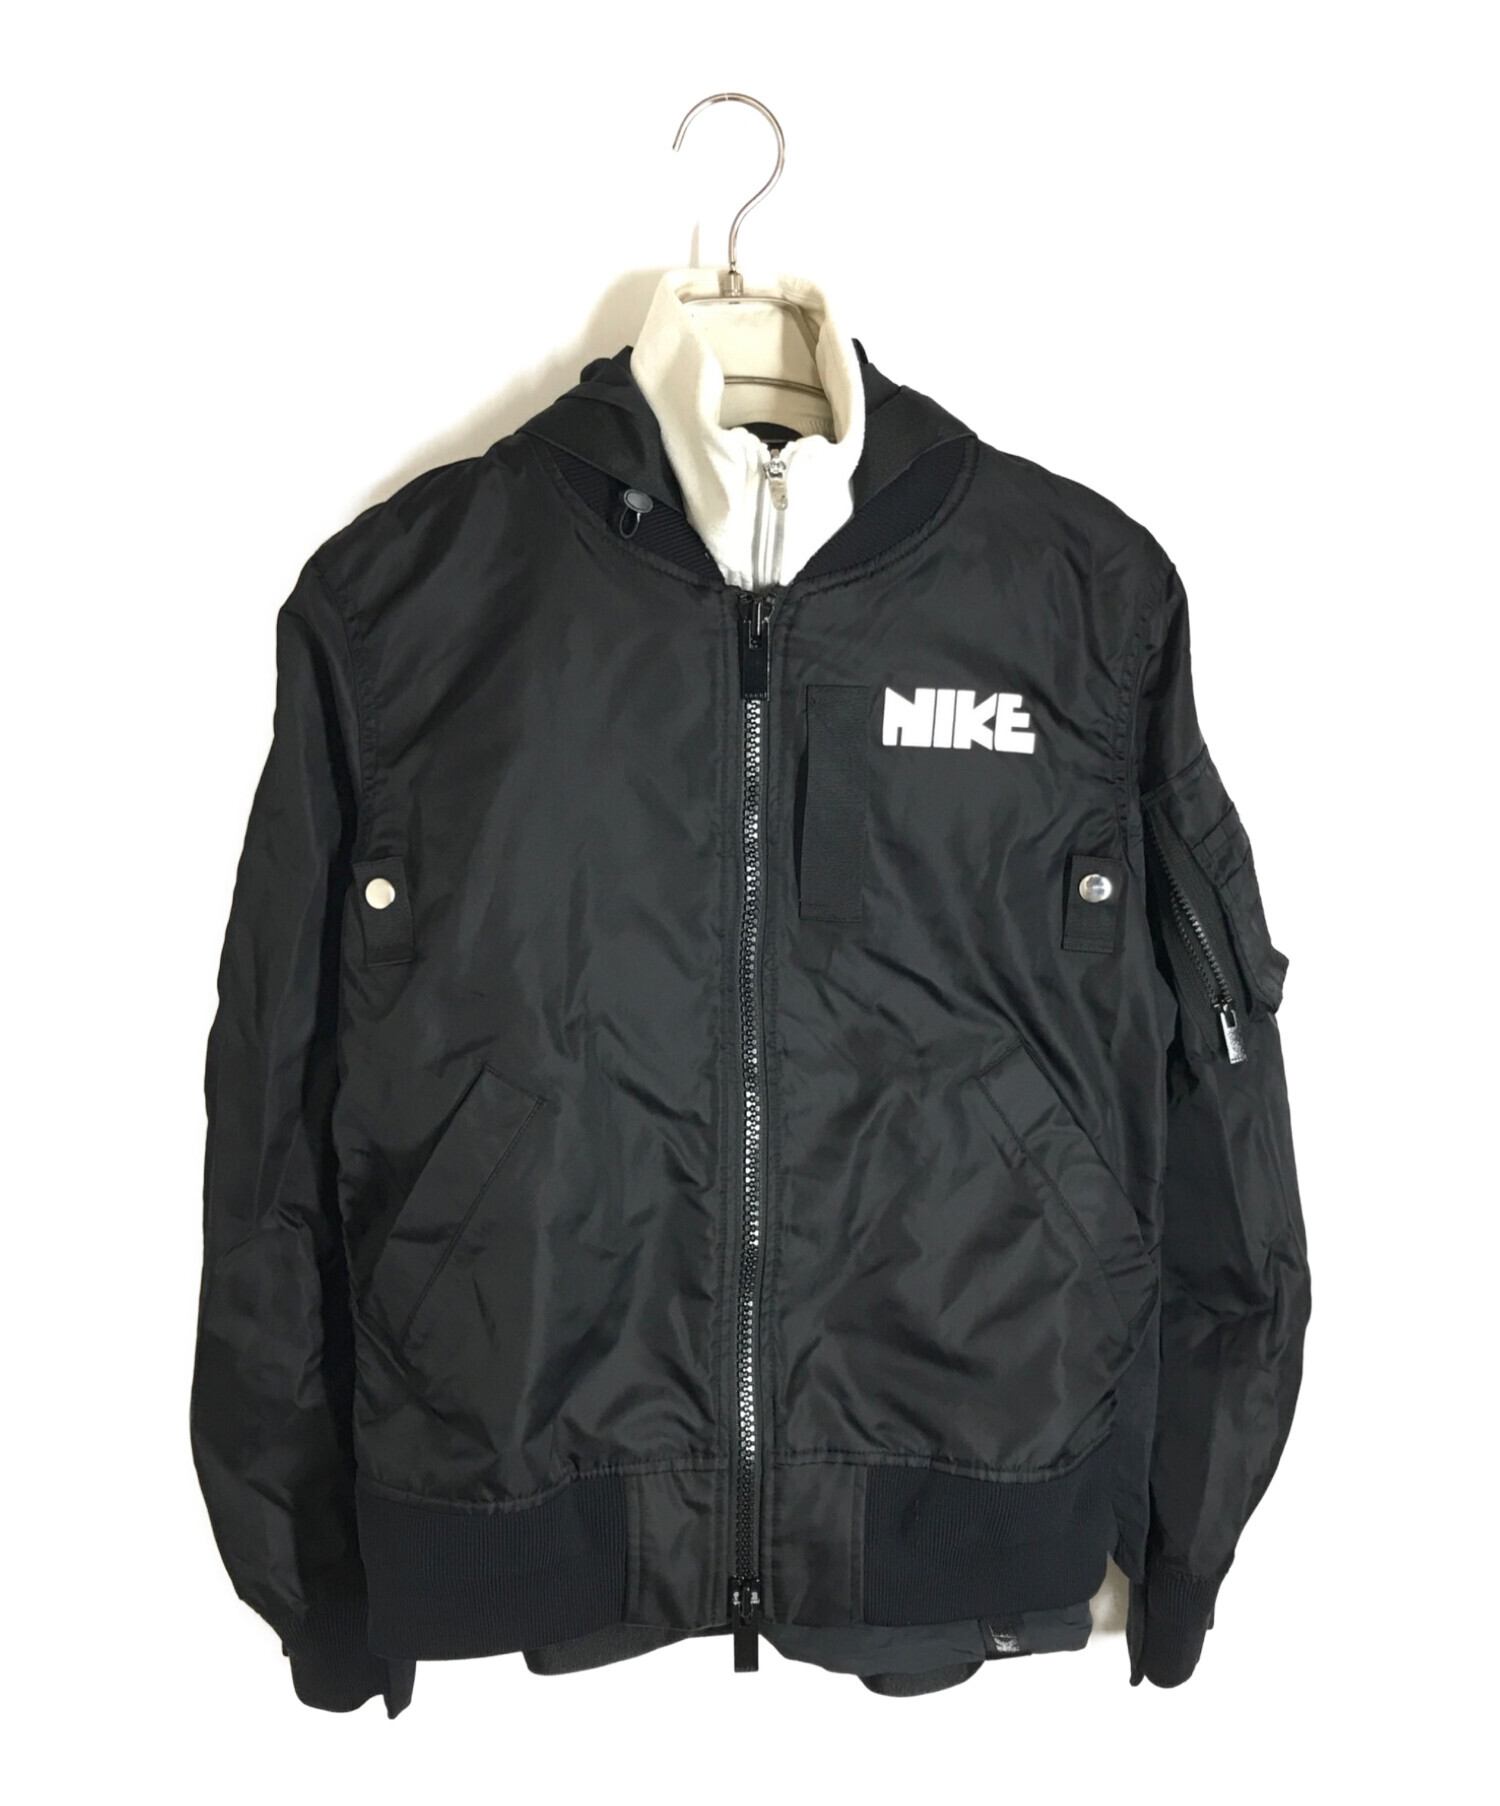 NIKE×sacai (ナイキ×サカイ) コラボレイヤードボンバージャケット ブラック サイズ:S